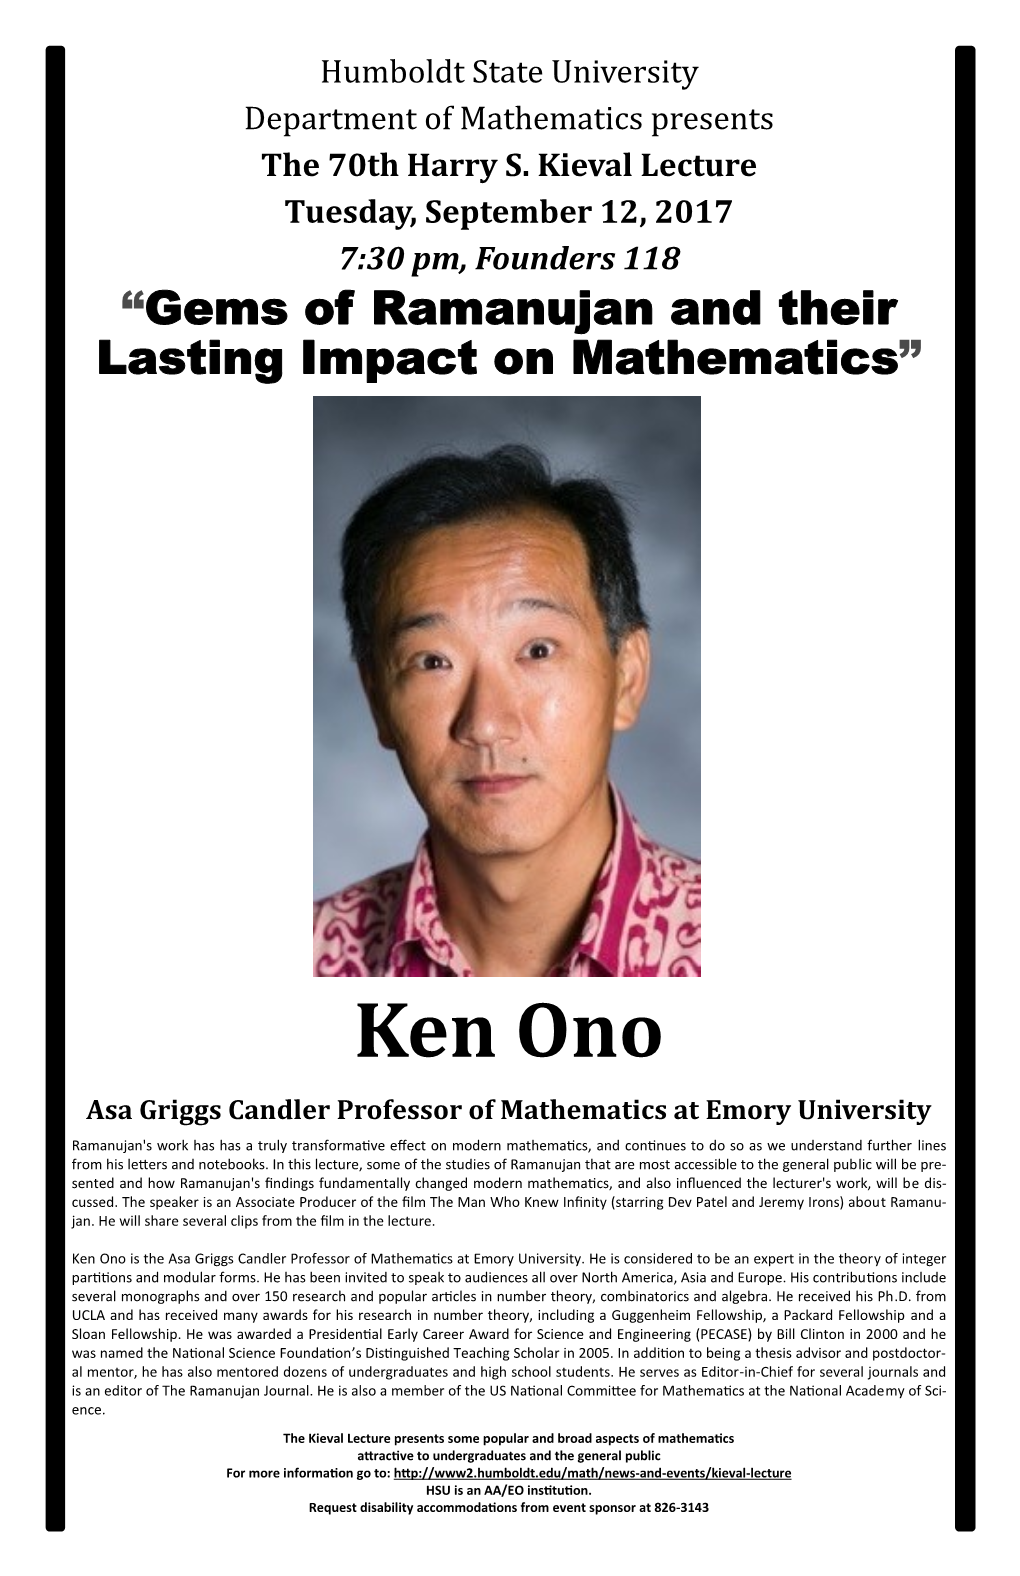 Ken Ono Asa Griggs Candler Professor of Mathematics at Emory University